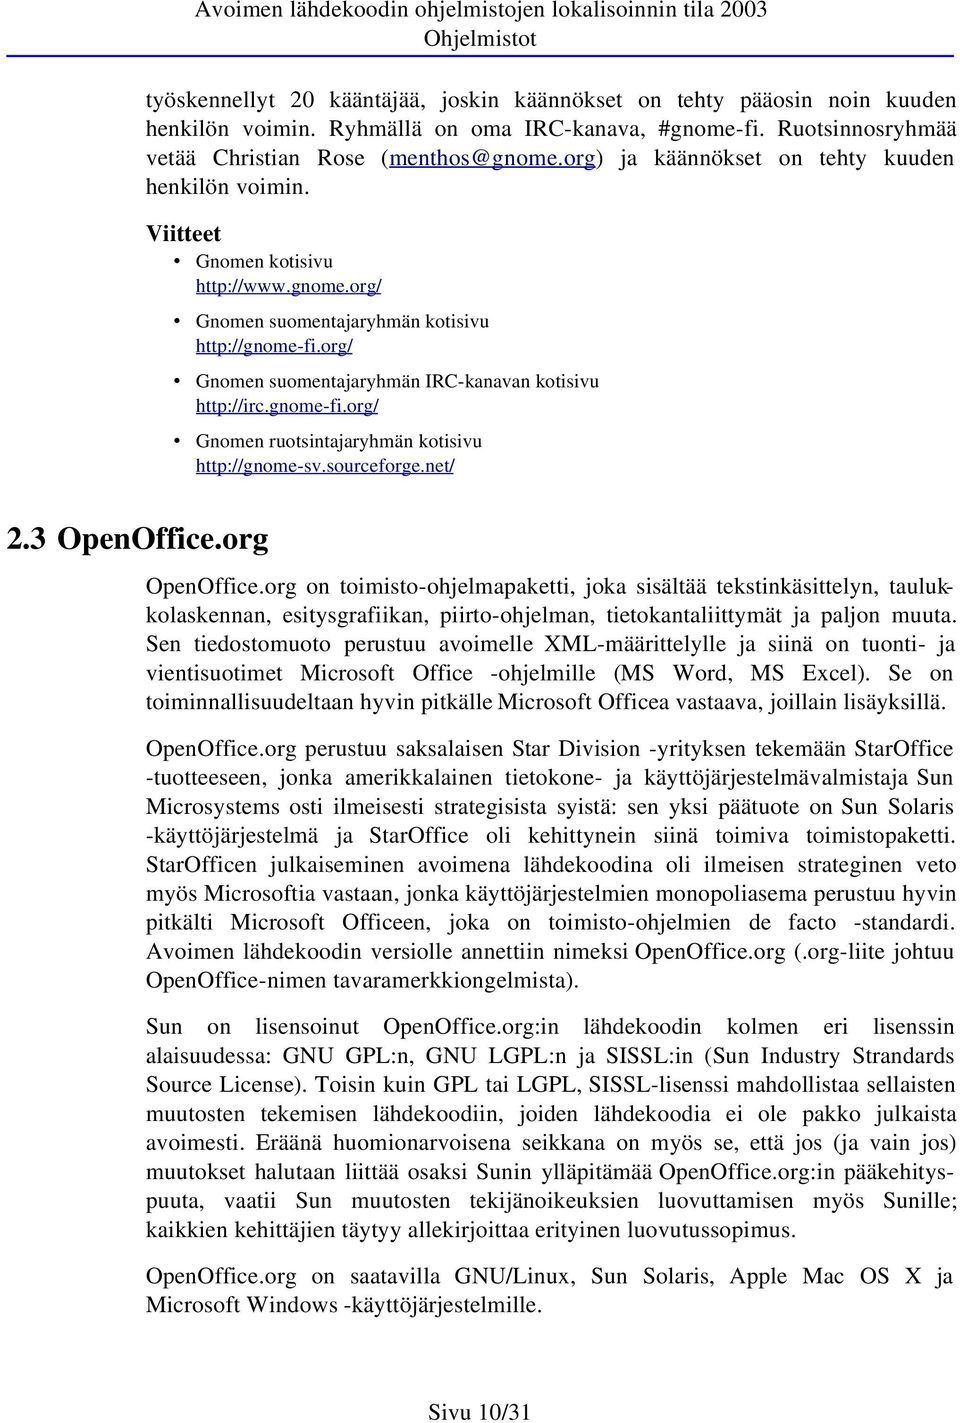 org/ Gnomen suomentajaryhmän IRC-kanavan kotisivu http://irc.gnome-fi.org/ Gnomen ruotsintajaryhmän kotisivu http://gnome-sv.sourceforge.net/ 2.3 OpenOffice.org OpenOffice.